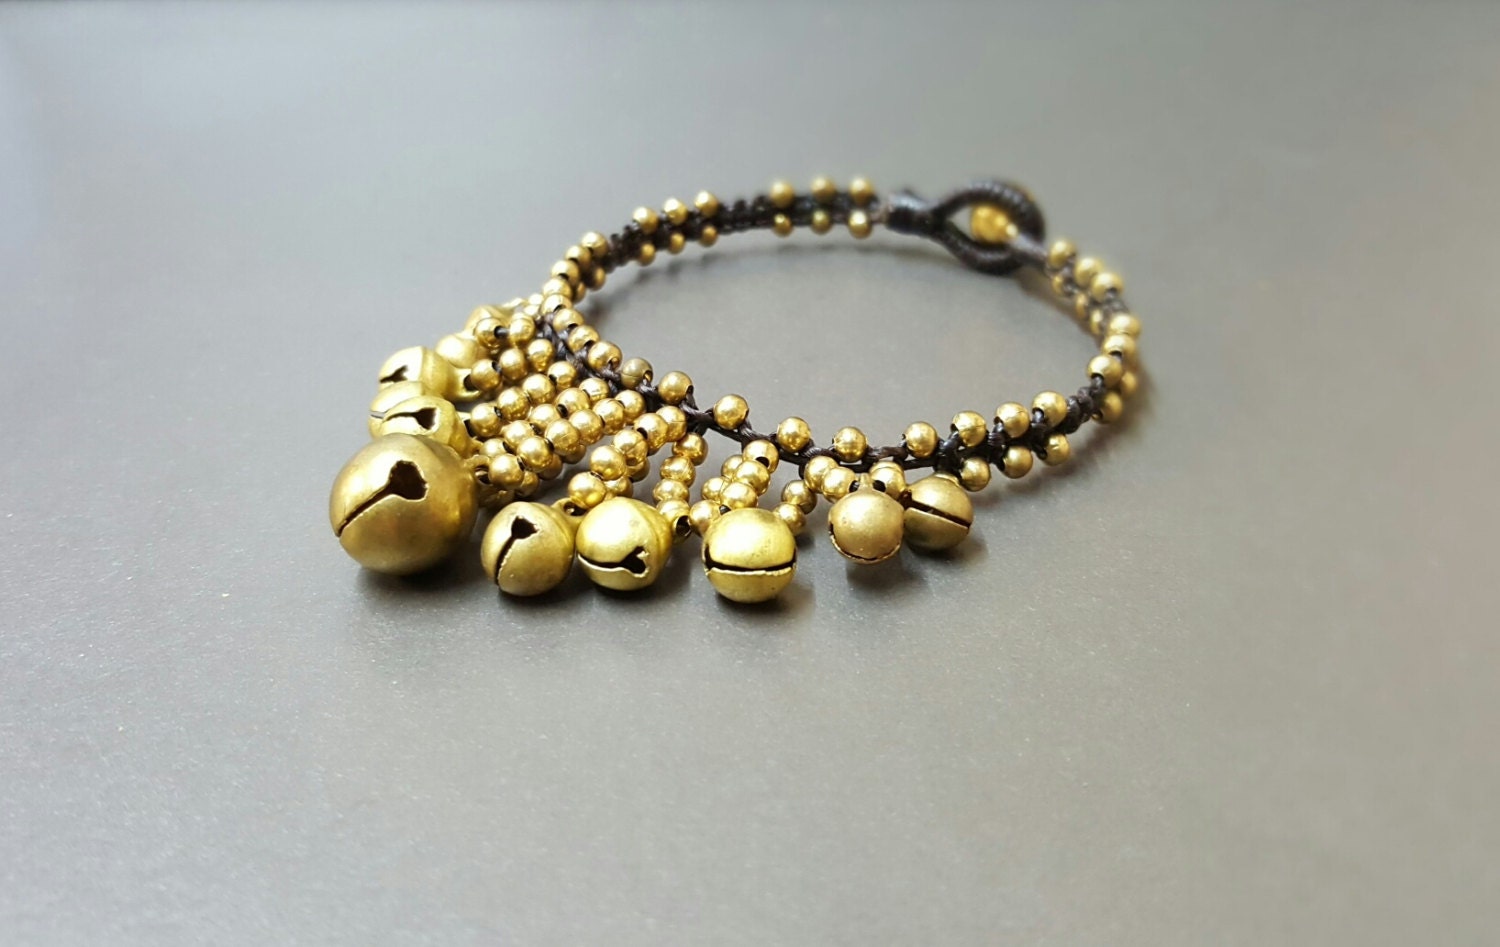 Hilltribe Jingling Gold Messing Frauen Schmuck Armband Fußkette, Perlenarmband, Glöckchen Armband, Wickelarmband von bymemade